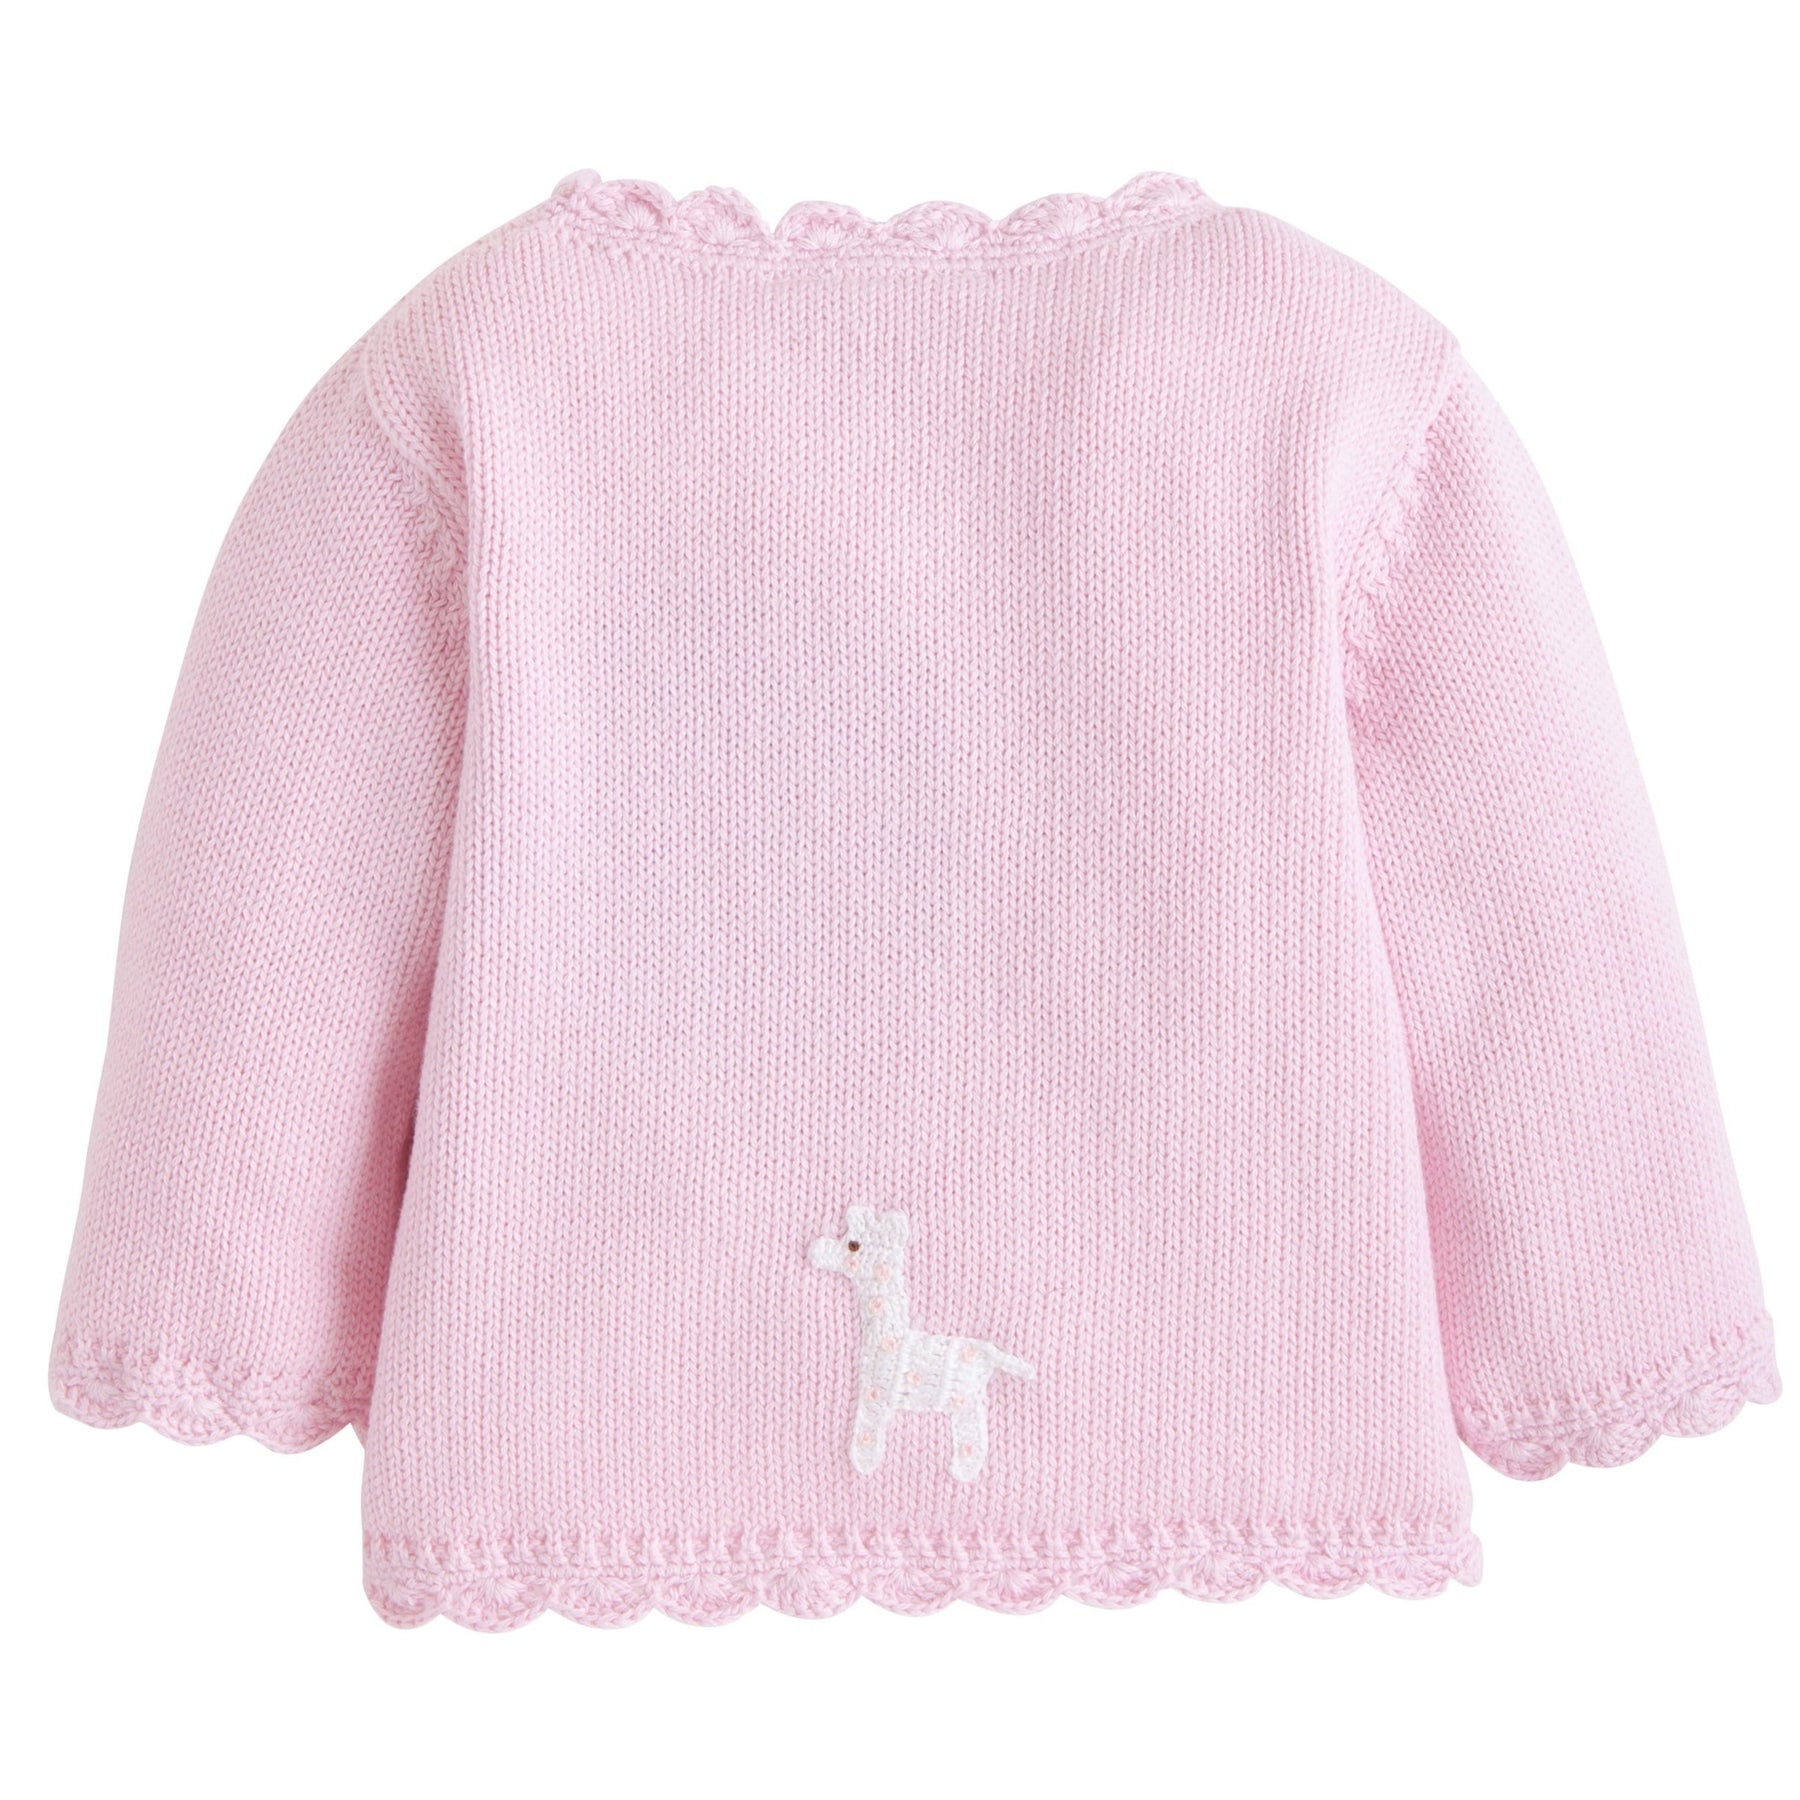 seguridadindustrialcr traditional crochet sweater for baby, pink giraffe crochet sweater for baby girl